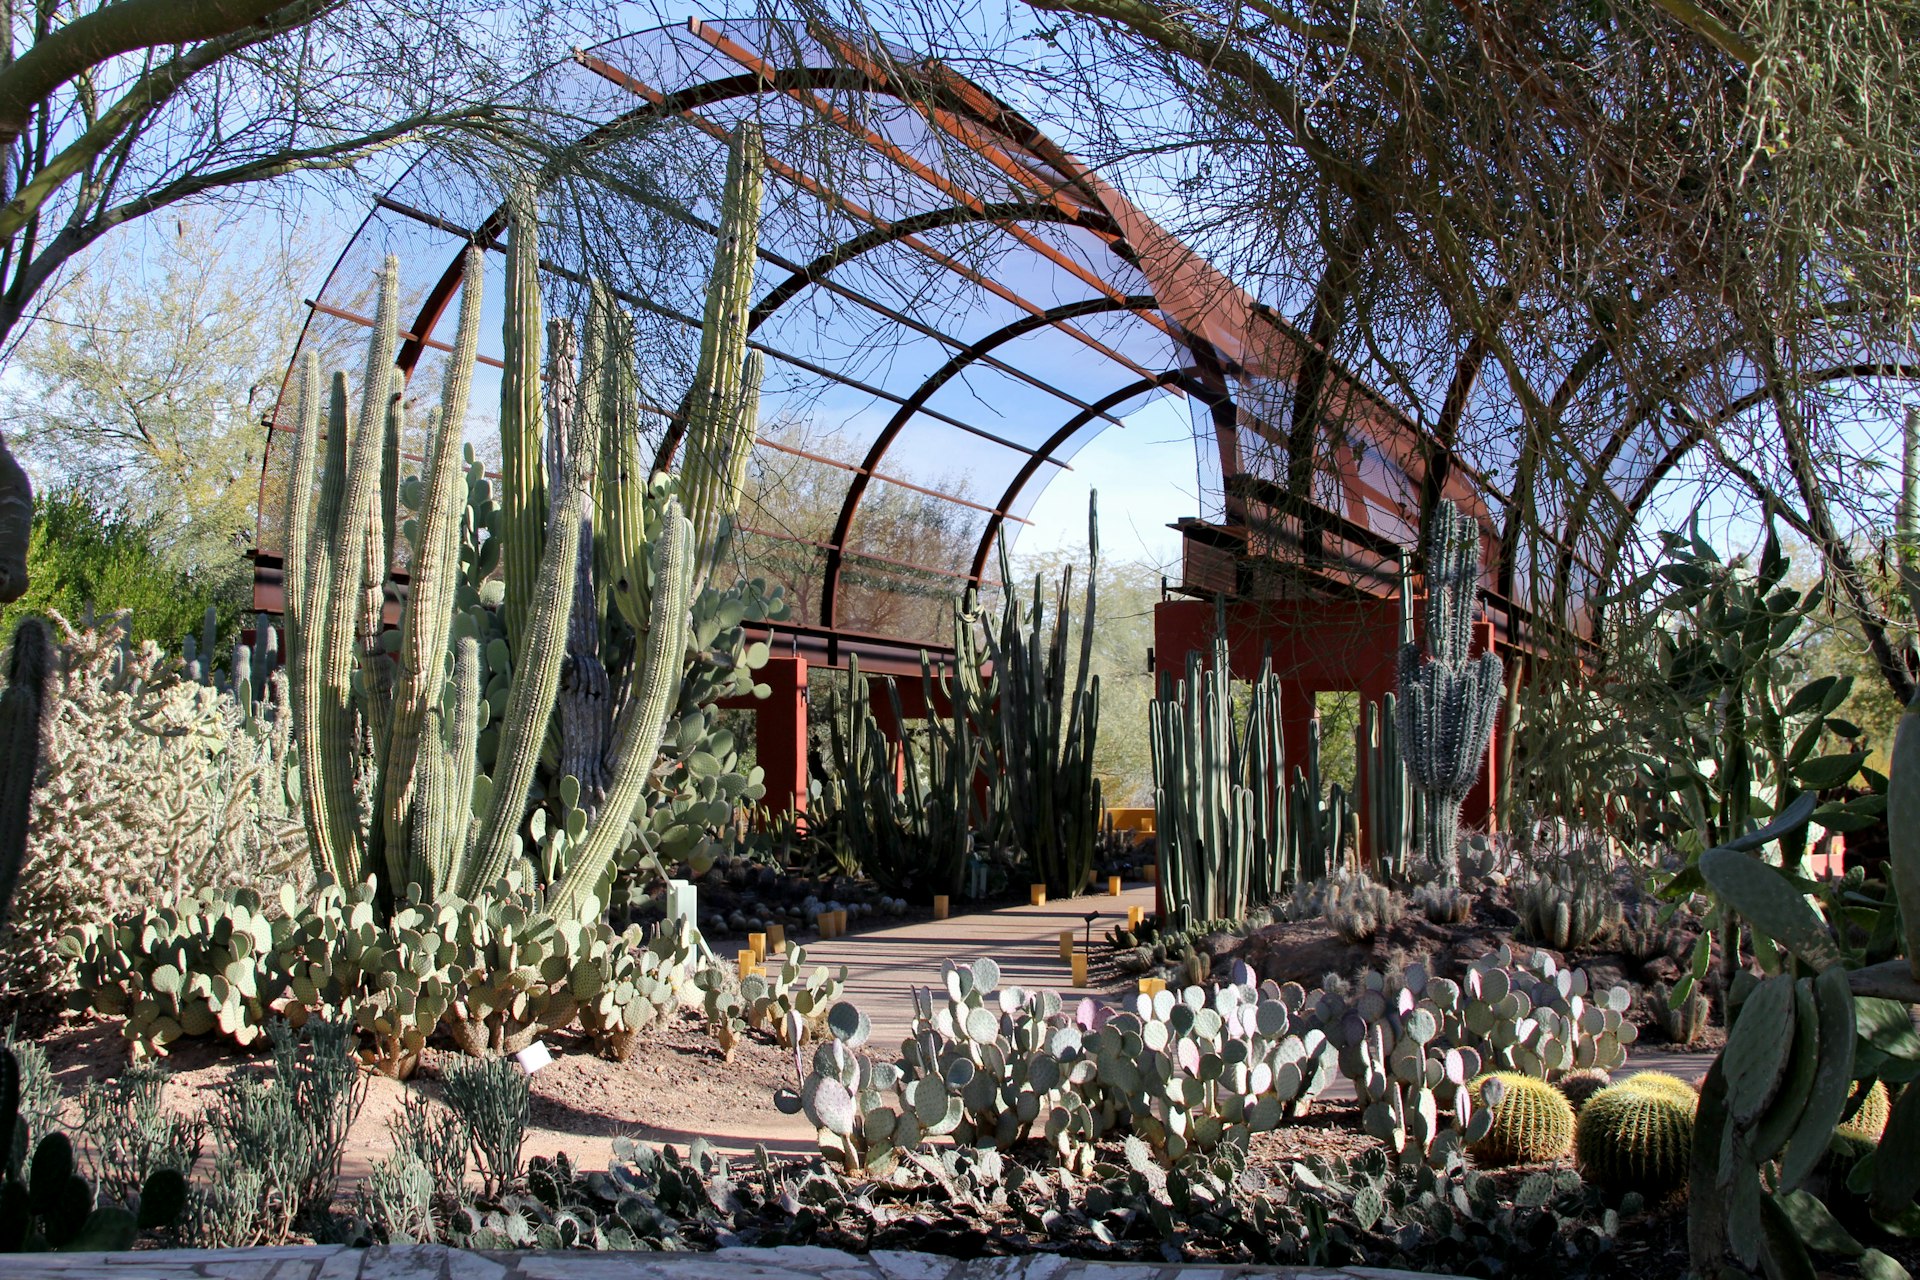 Desert Botanical Garden portal entrance, Phoenix, Arizona with varied cacti and desert plants.